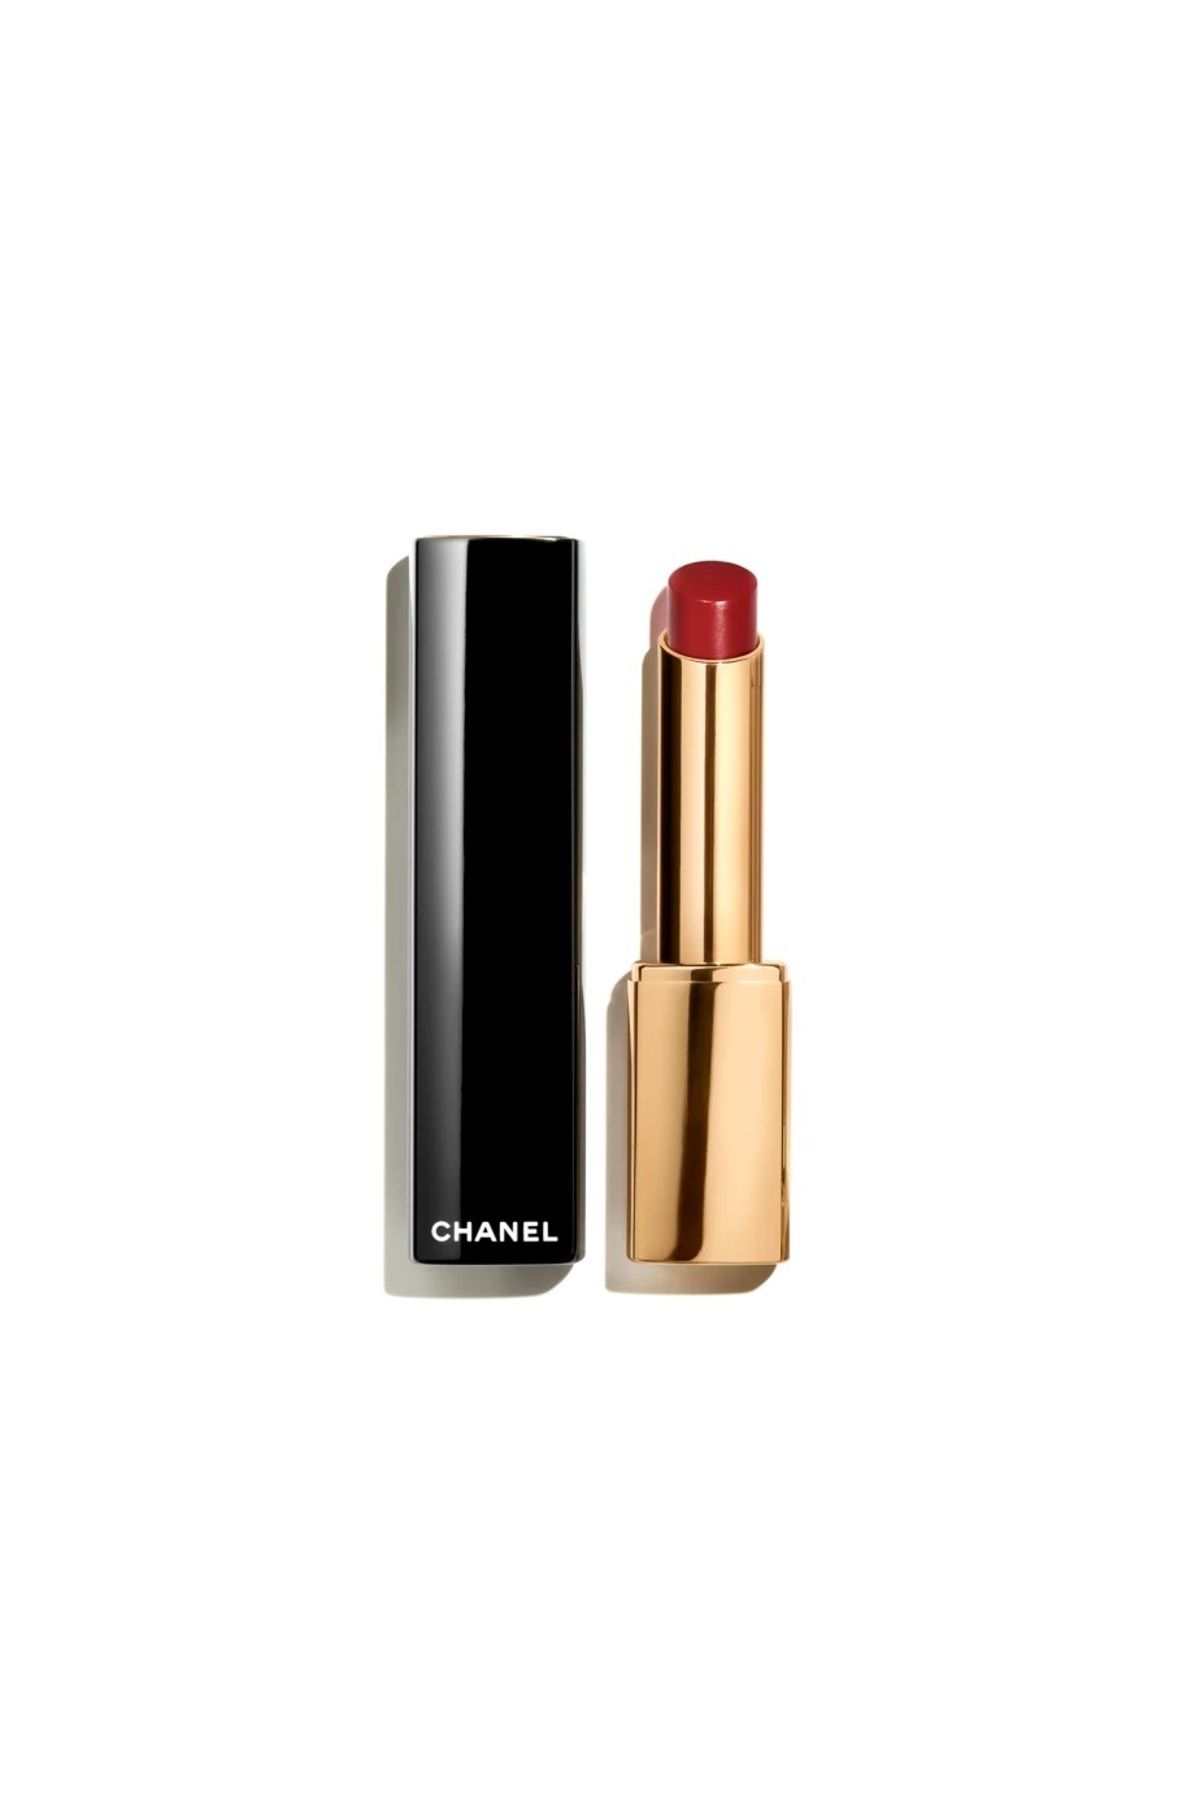 Chanel ROUGE ALLURE L’EXTRAIT- 12 Saat Etkili Nemlendirici Ultra Yüksek Pigmentli Ruj